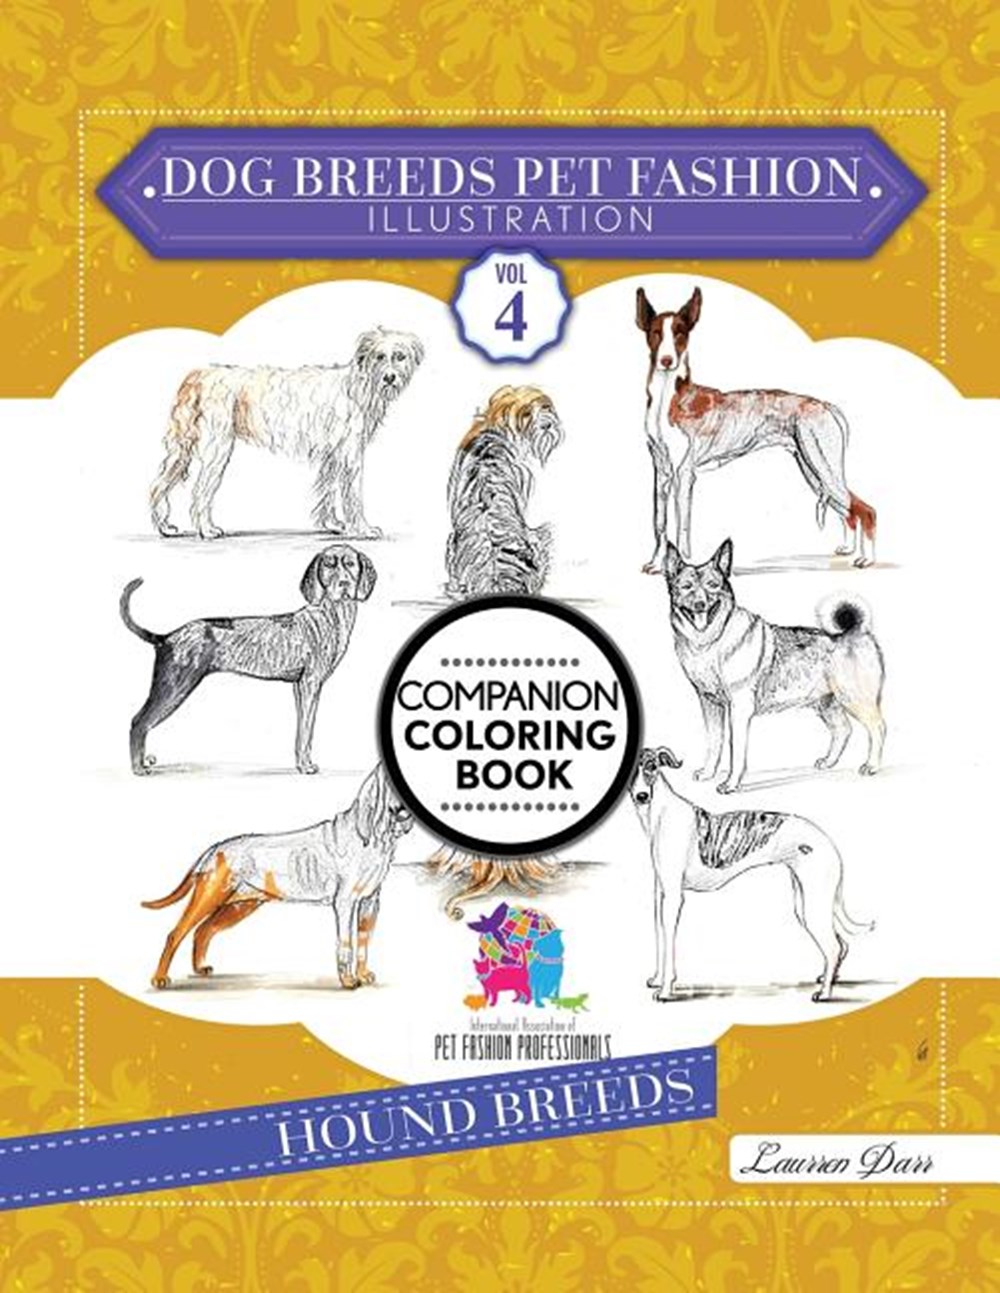 Dog Breeds Pet Fashion Illustration Encyclopedia: Volume 4 Hound Breeds